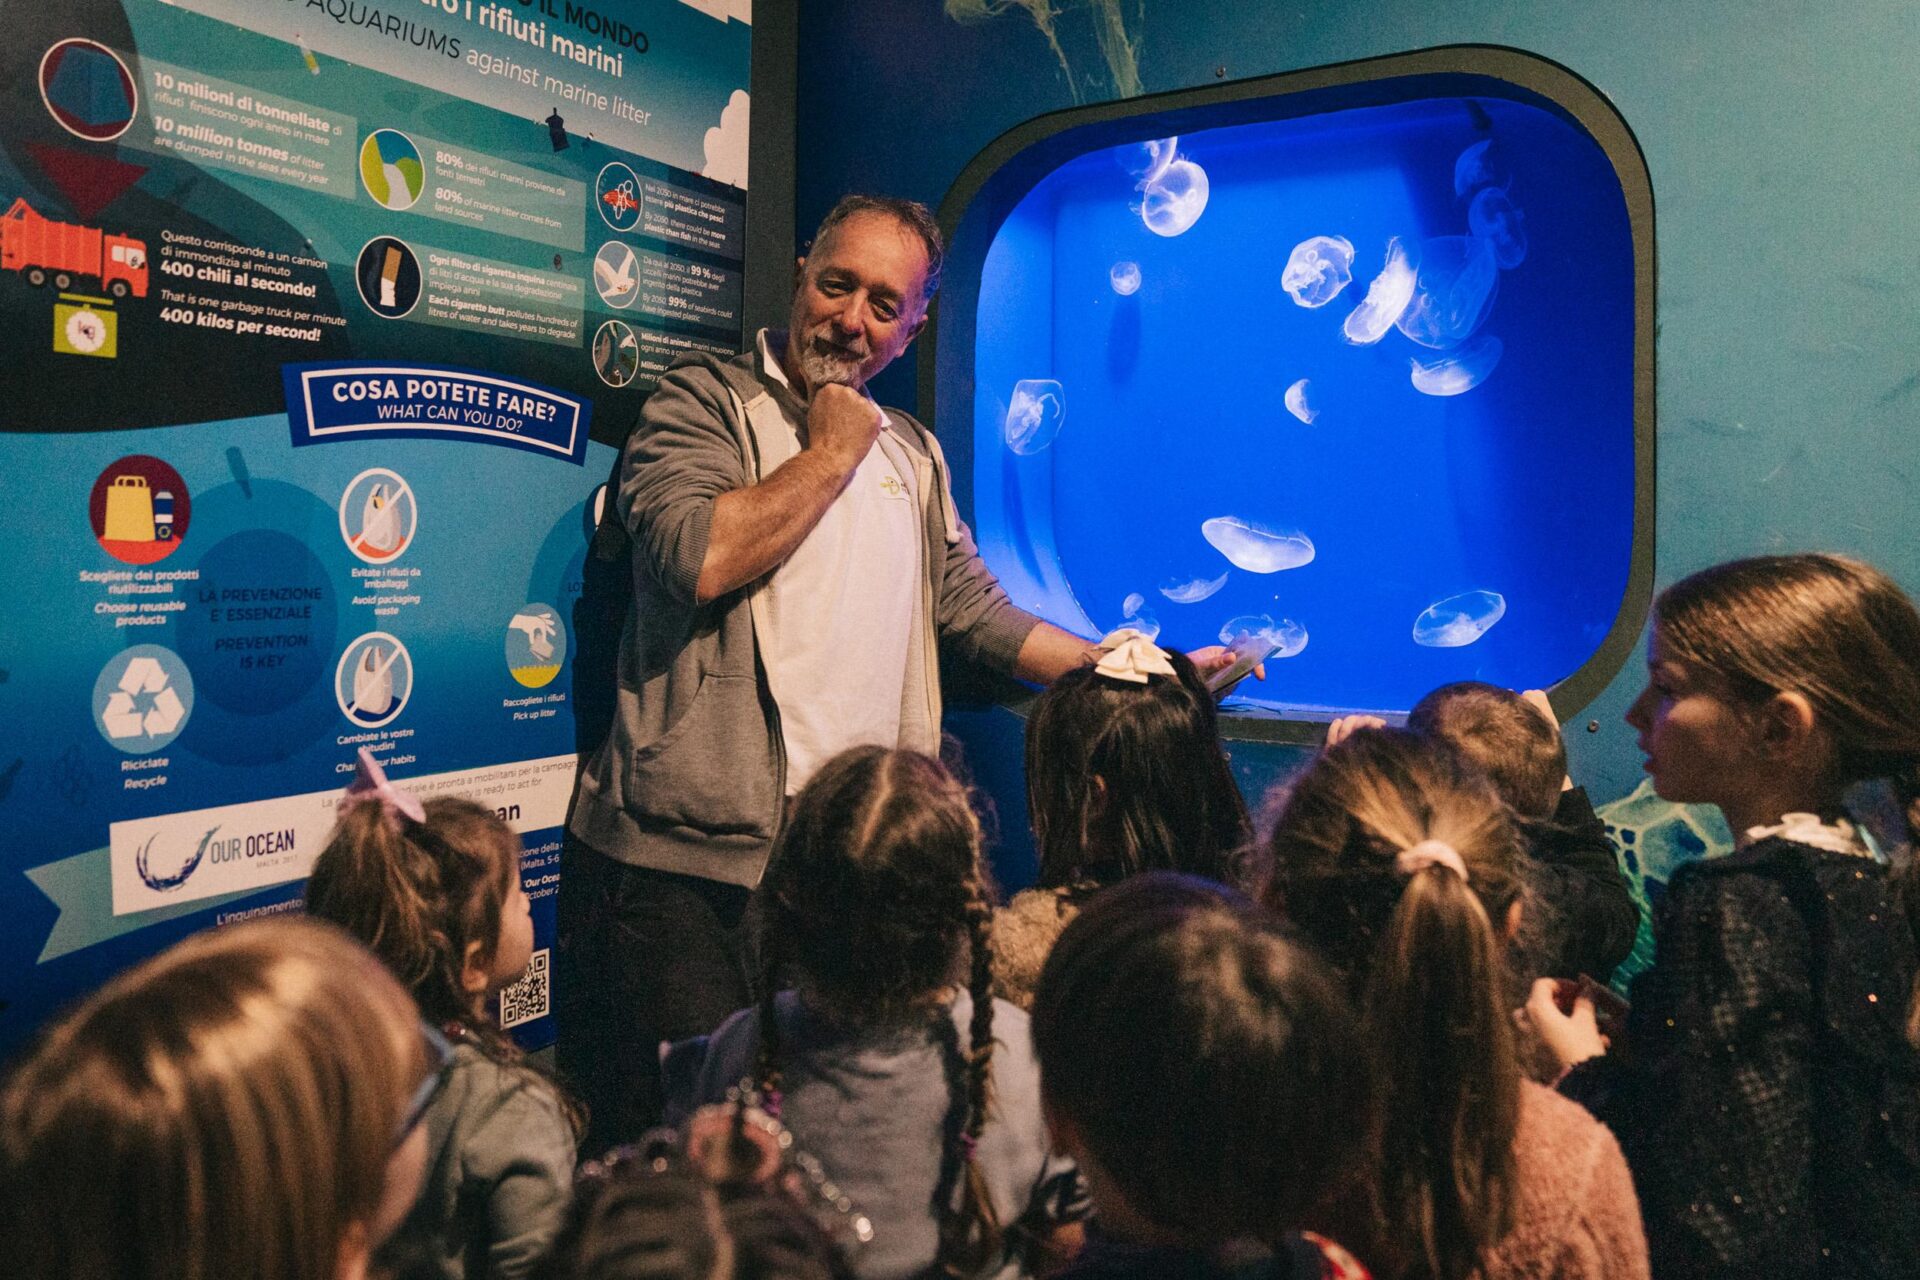 Livorno Aquarium, speech on the tour